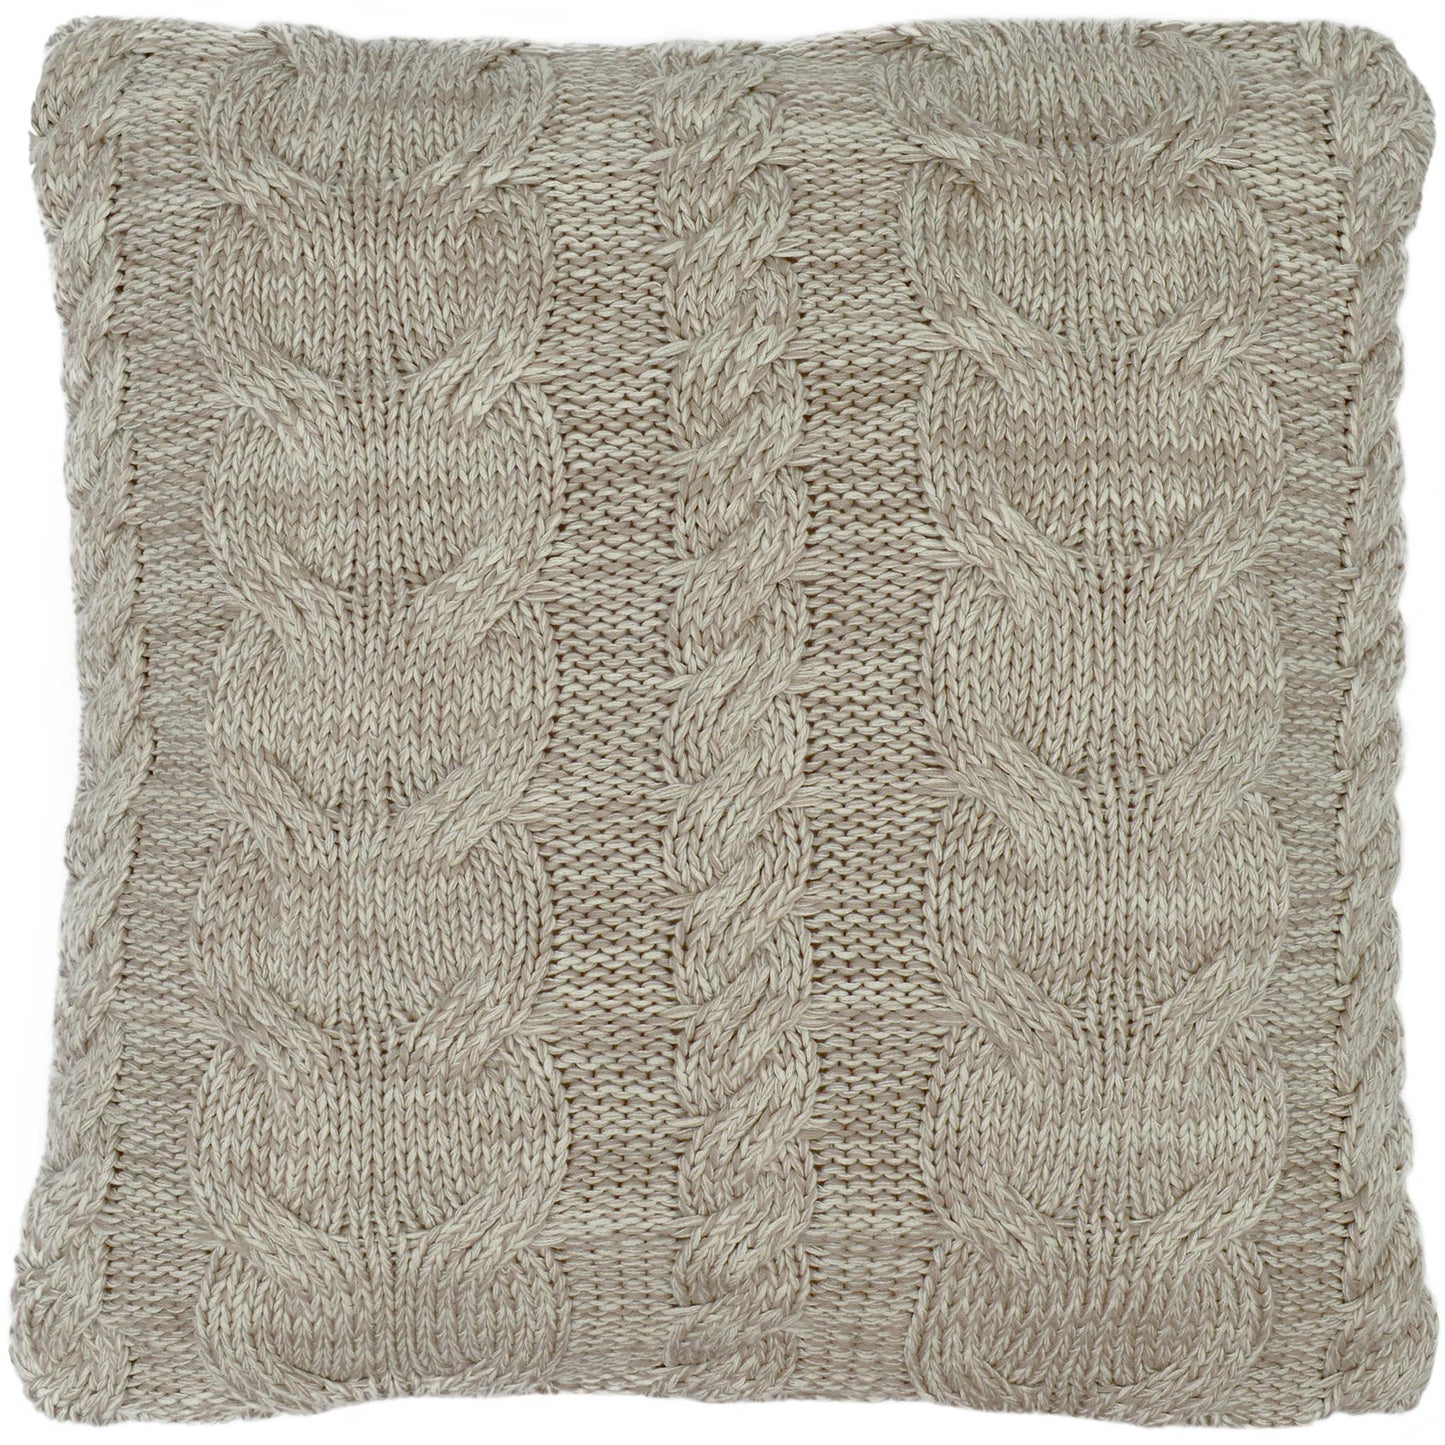 Chunky Braid Knit Cotton Pillow